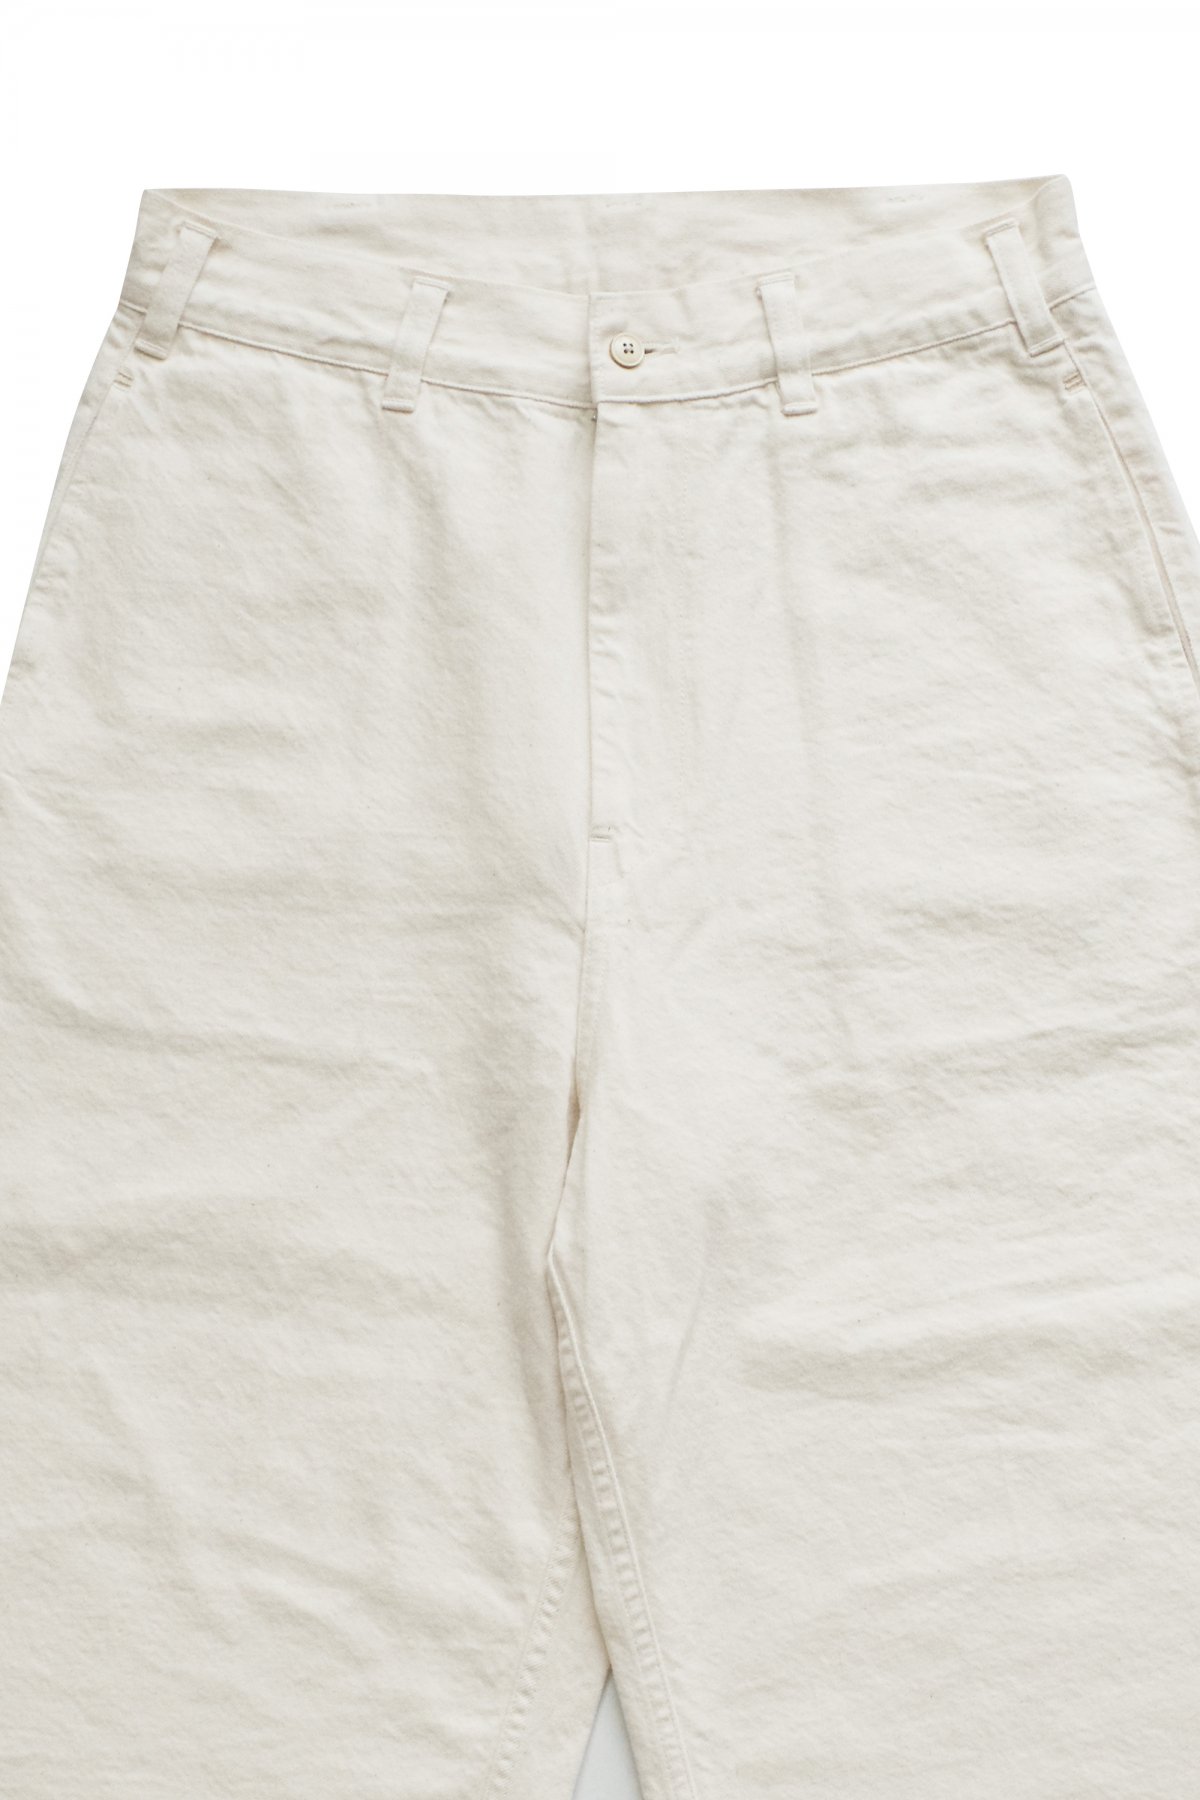 porter classic | summer white pants S